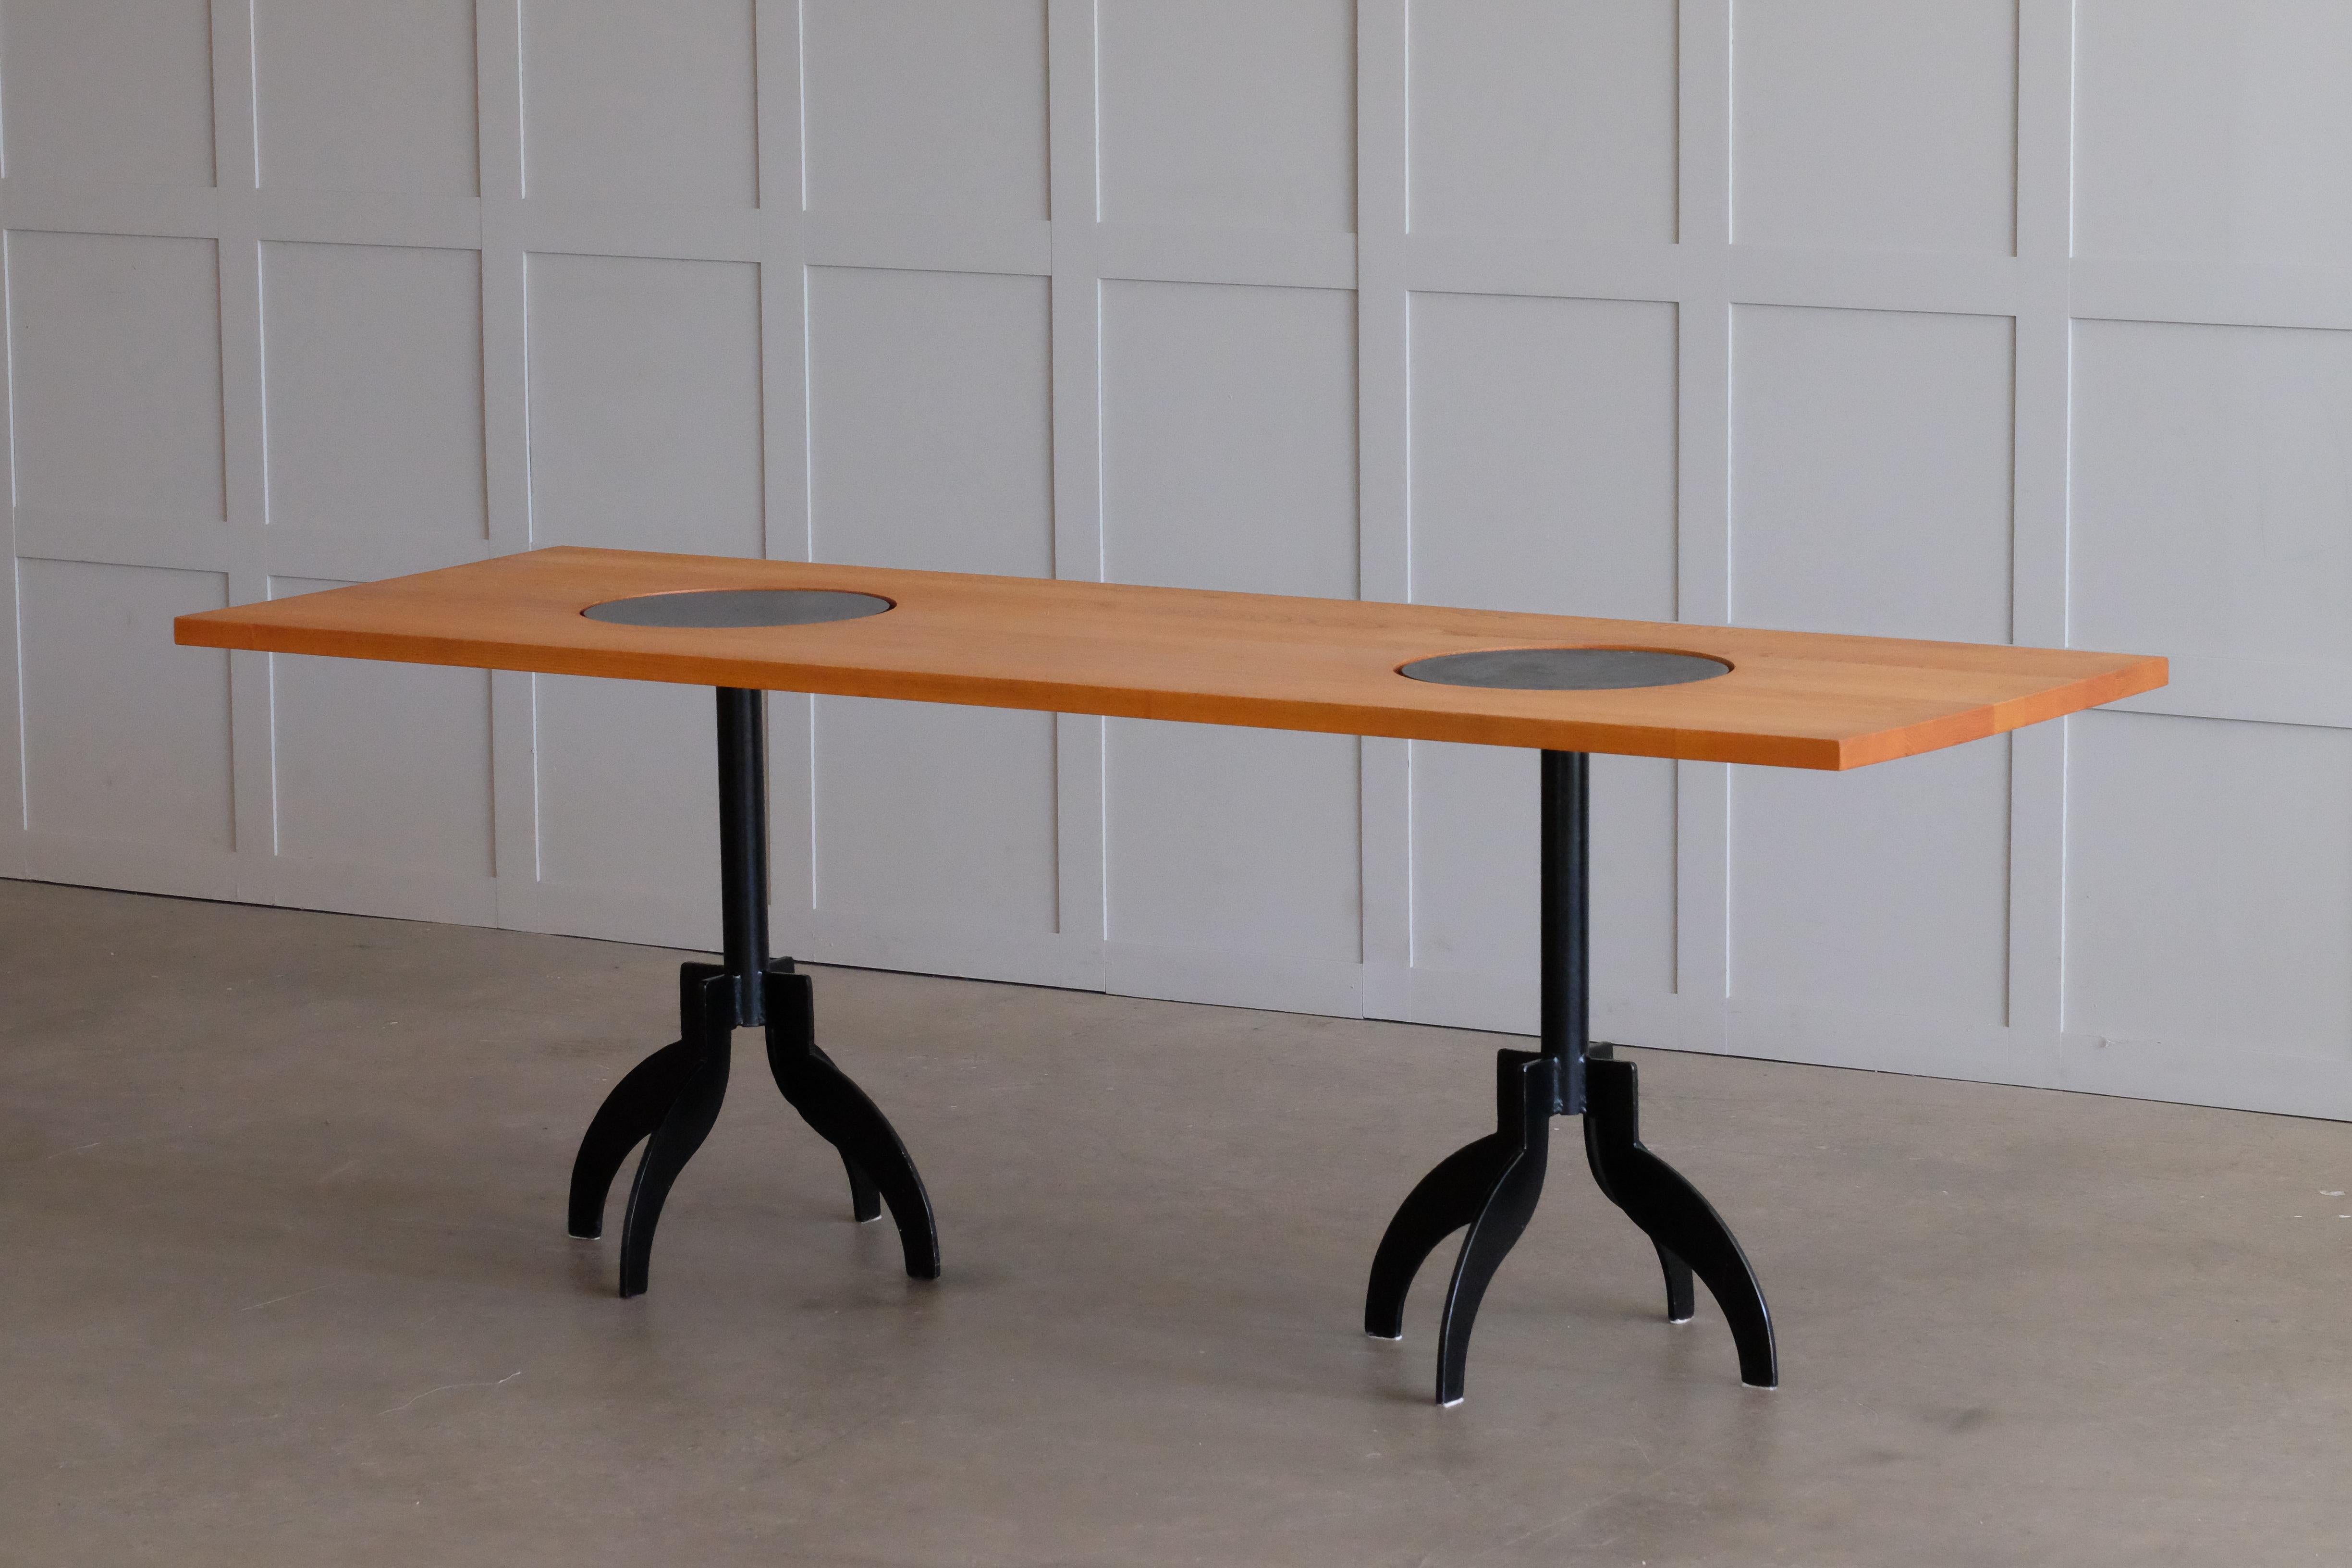 Table 'Triptyk' designed by Jonas Bohlin, produced by Källemo, Sweden, 1989.